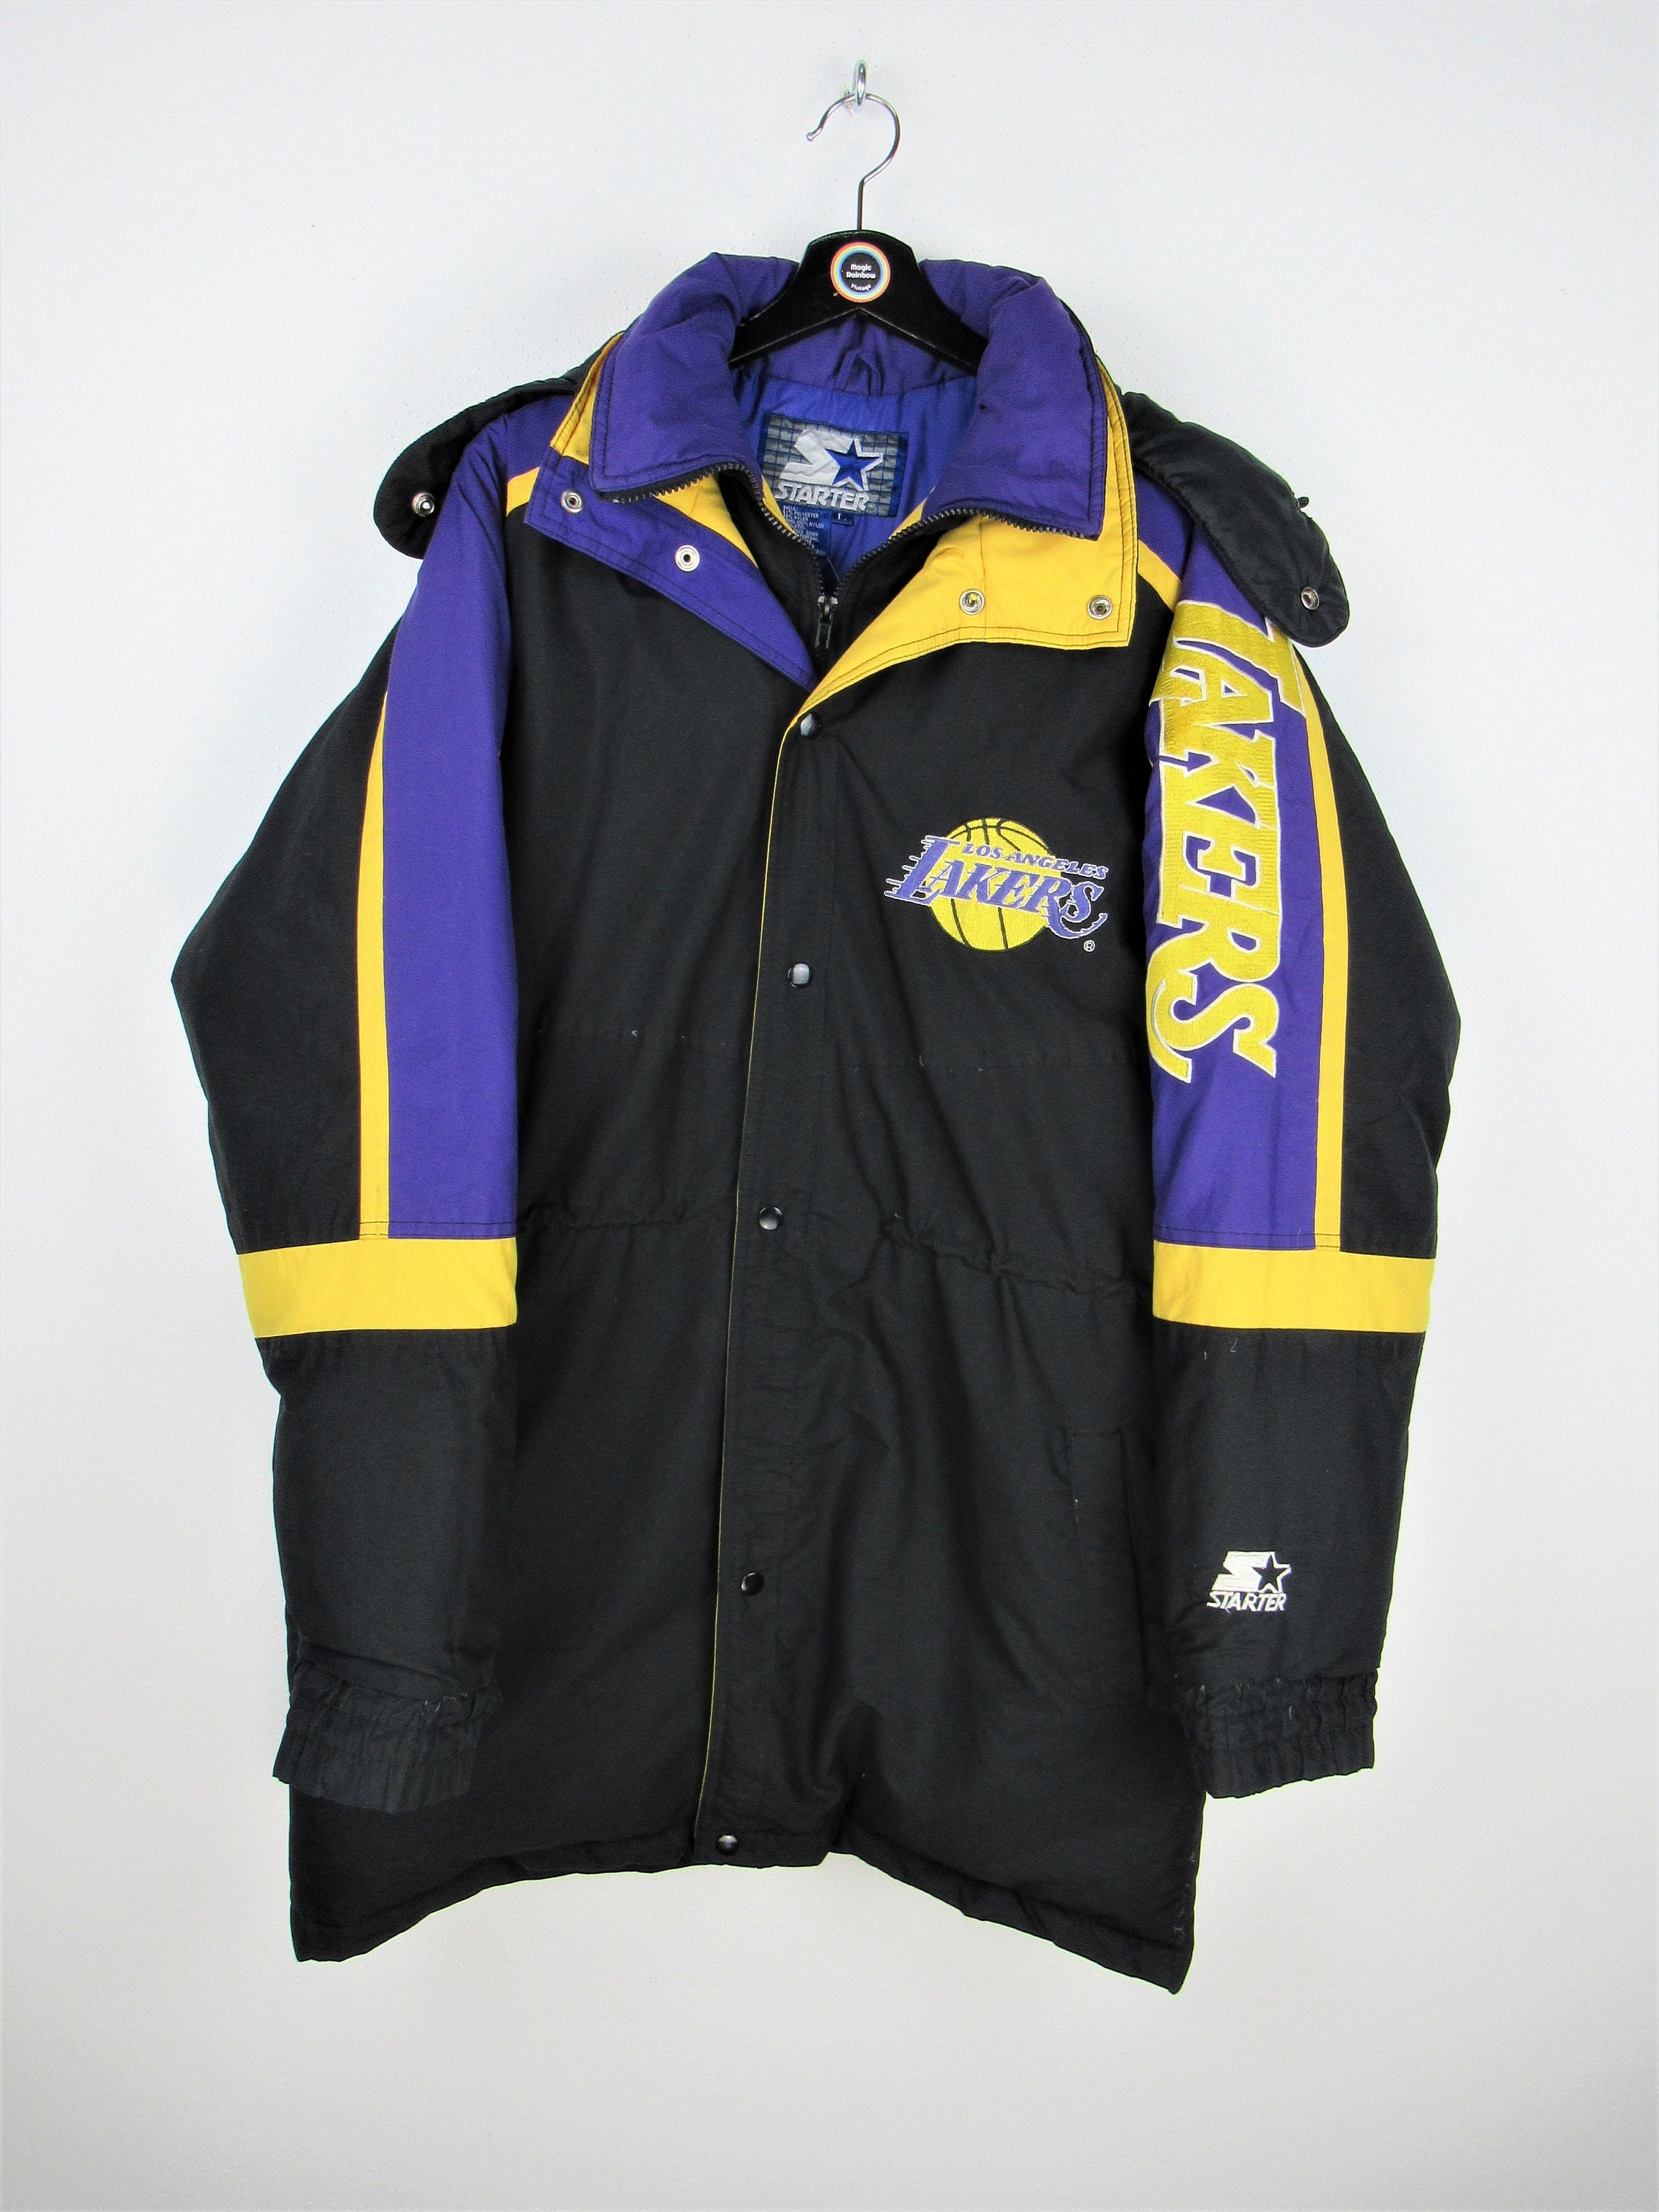 Jackets & Coats, Nba La Lakers Hardwood Classics Jacket